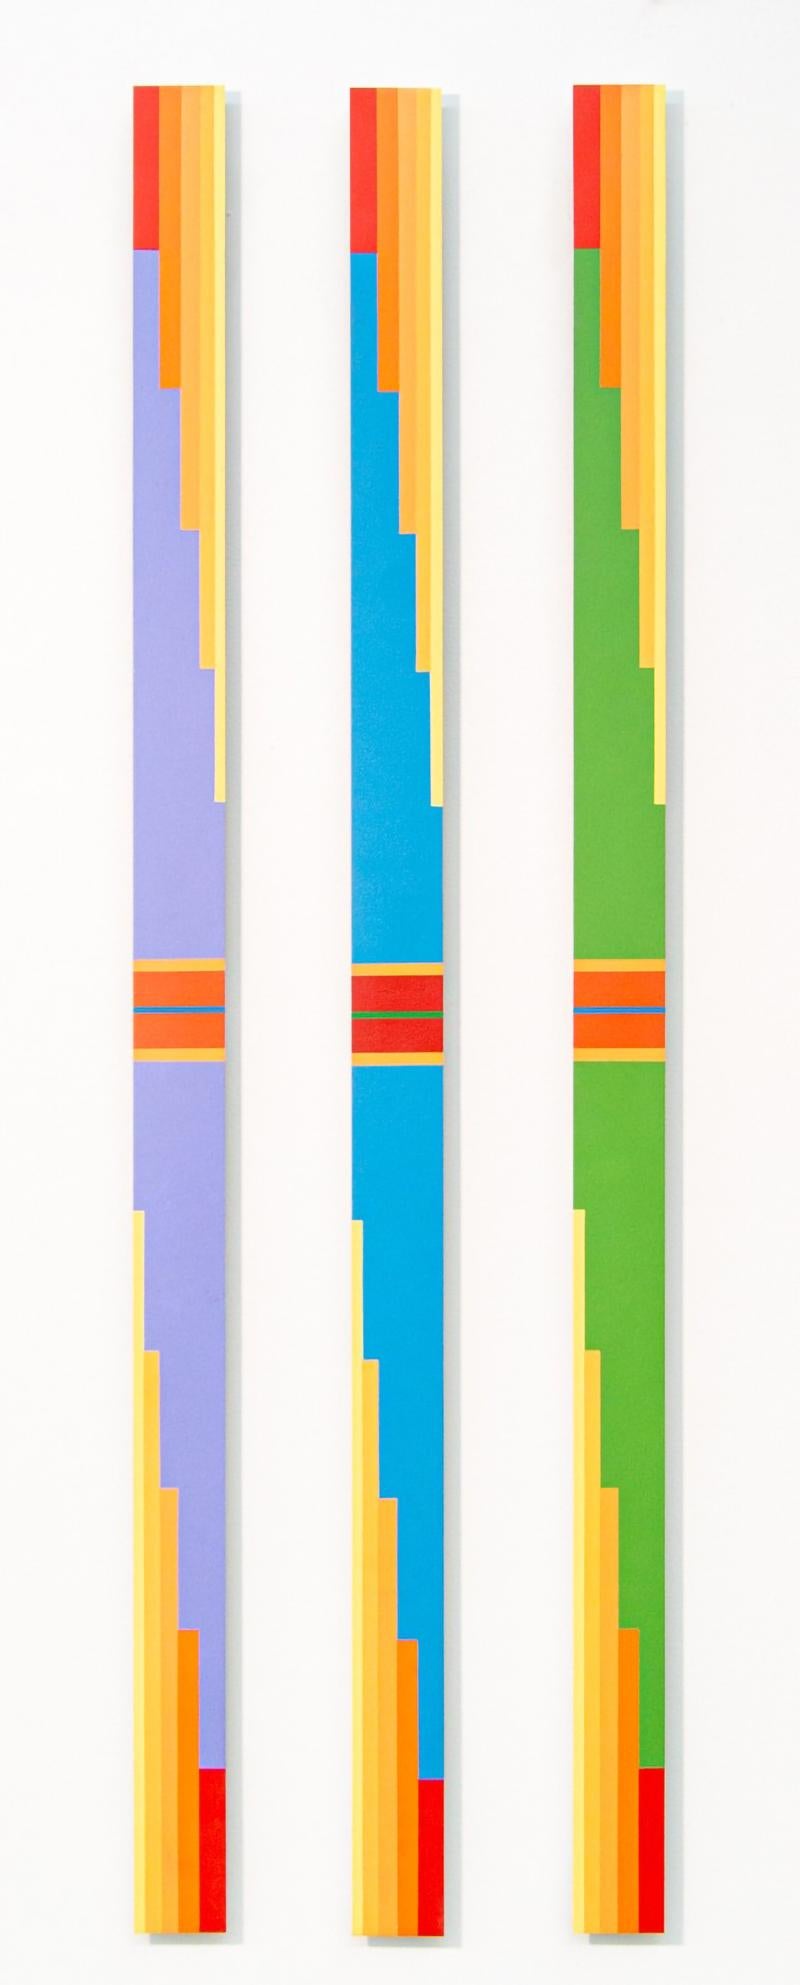 Burton Kramer Abstract Painting - TTH 6.2 Trio - tall, narrow, playful, geometric abstract, acrylic on aluminum